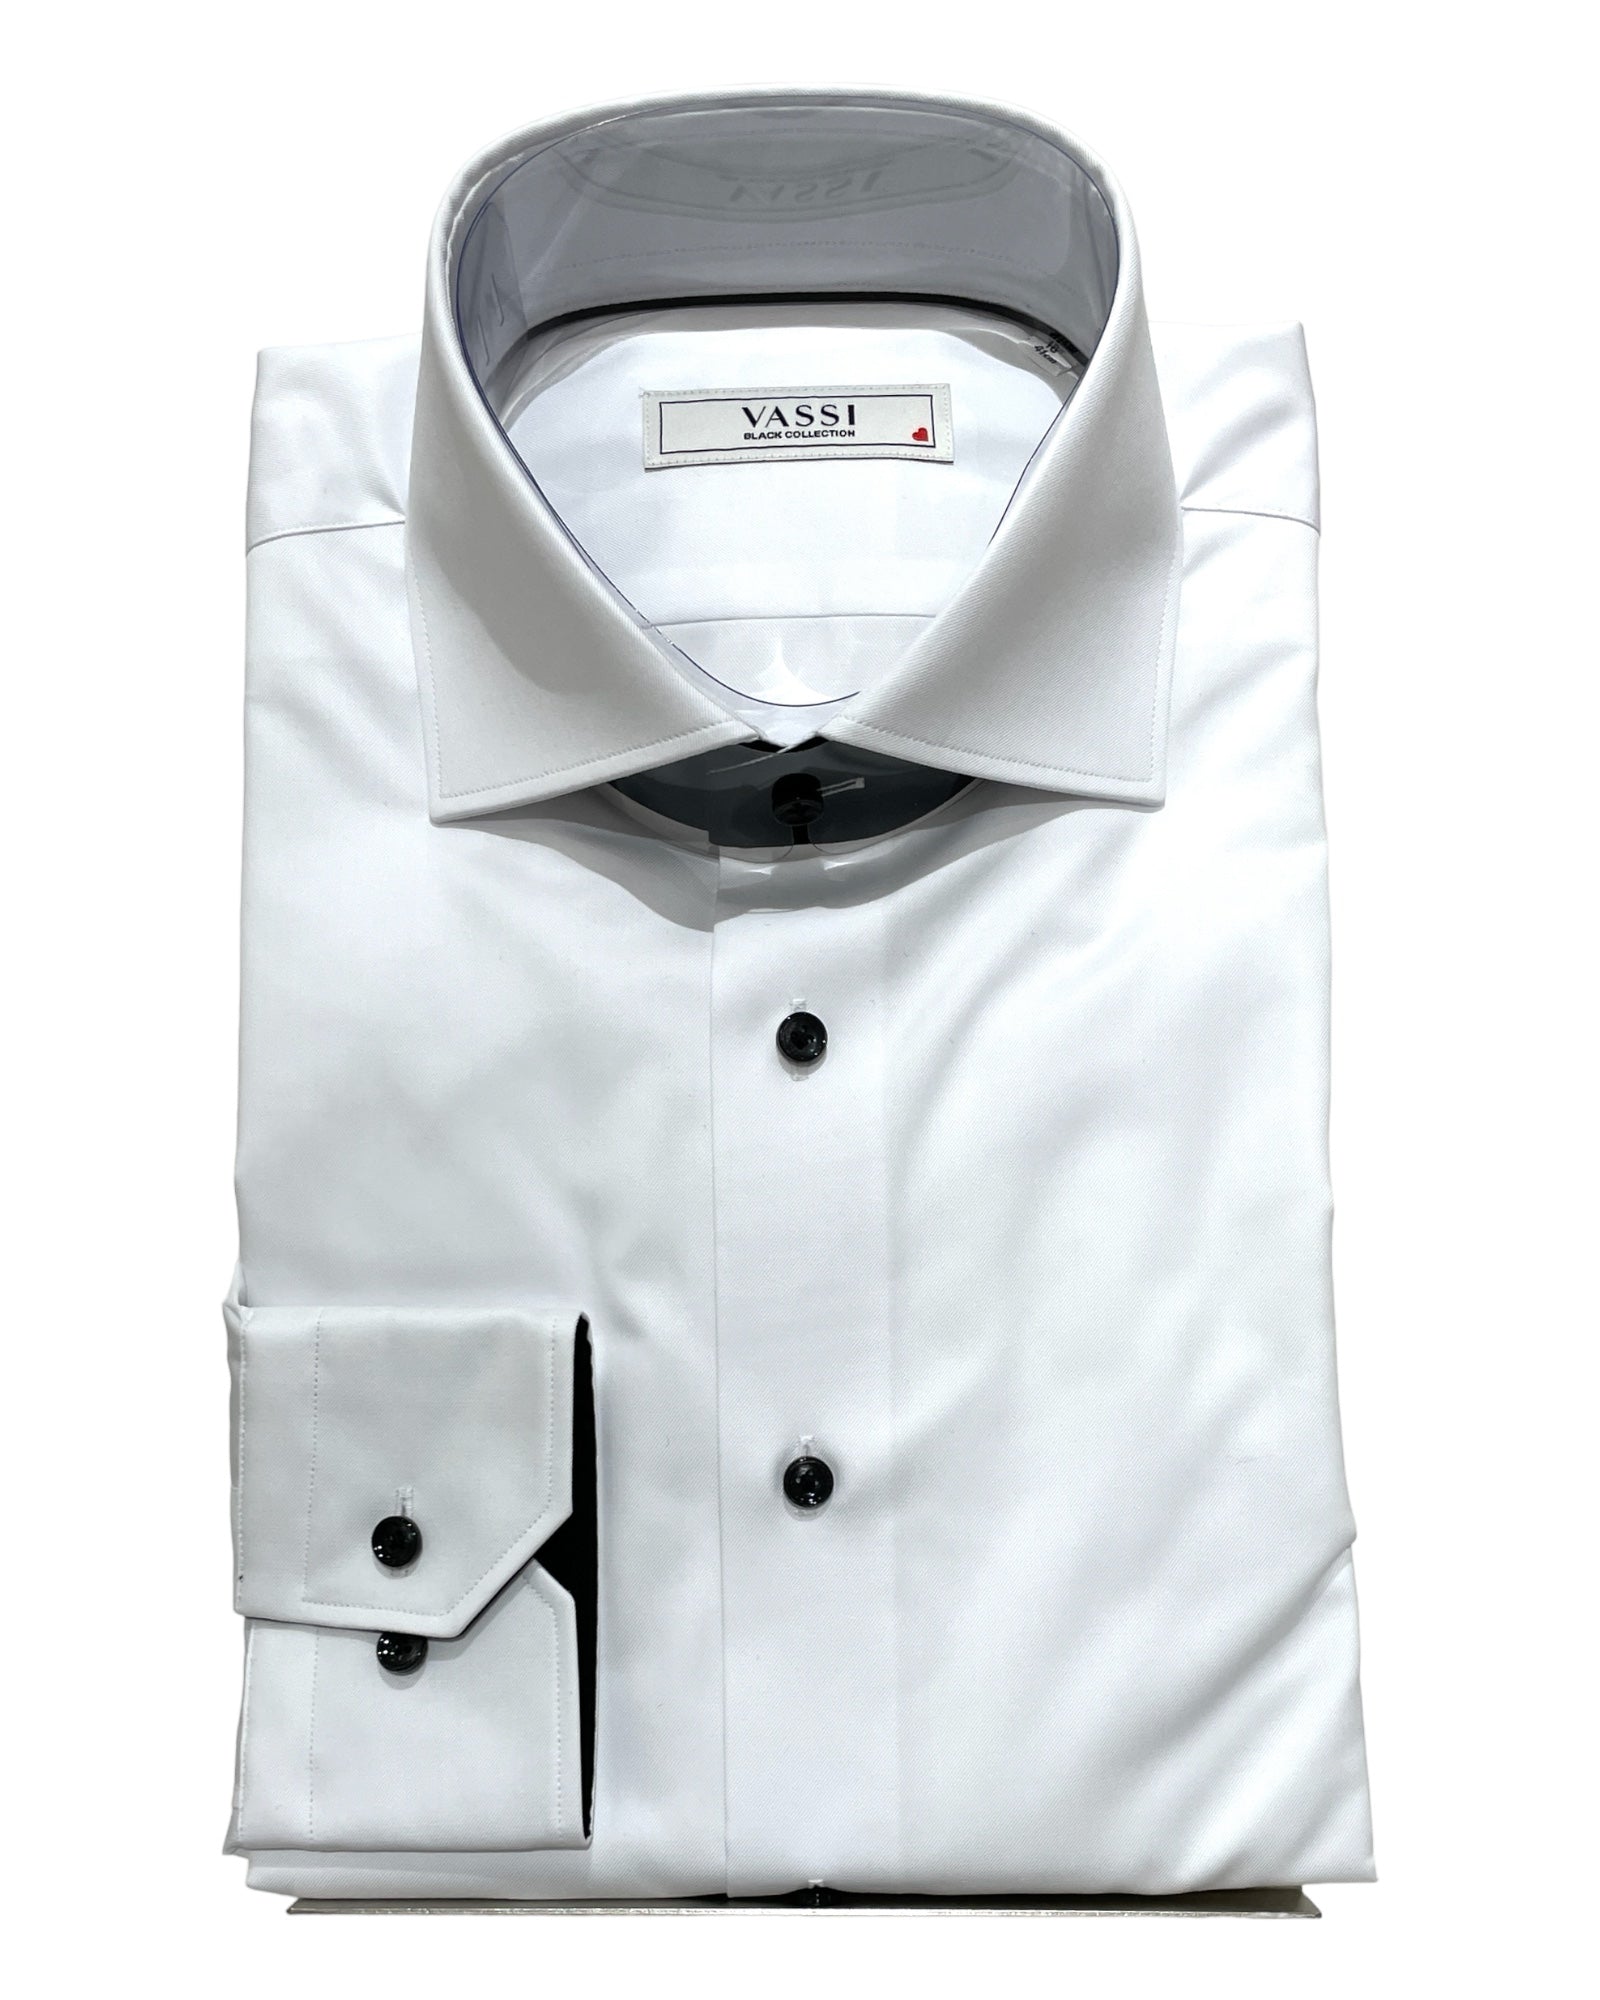 Semi-Formal Shirt - White, Black Buttons, Black Trim